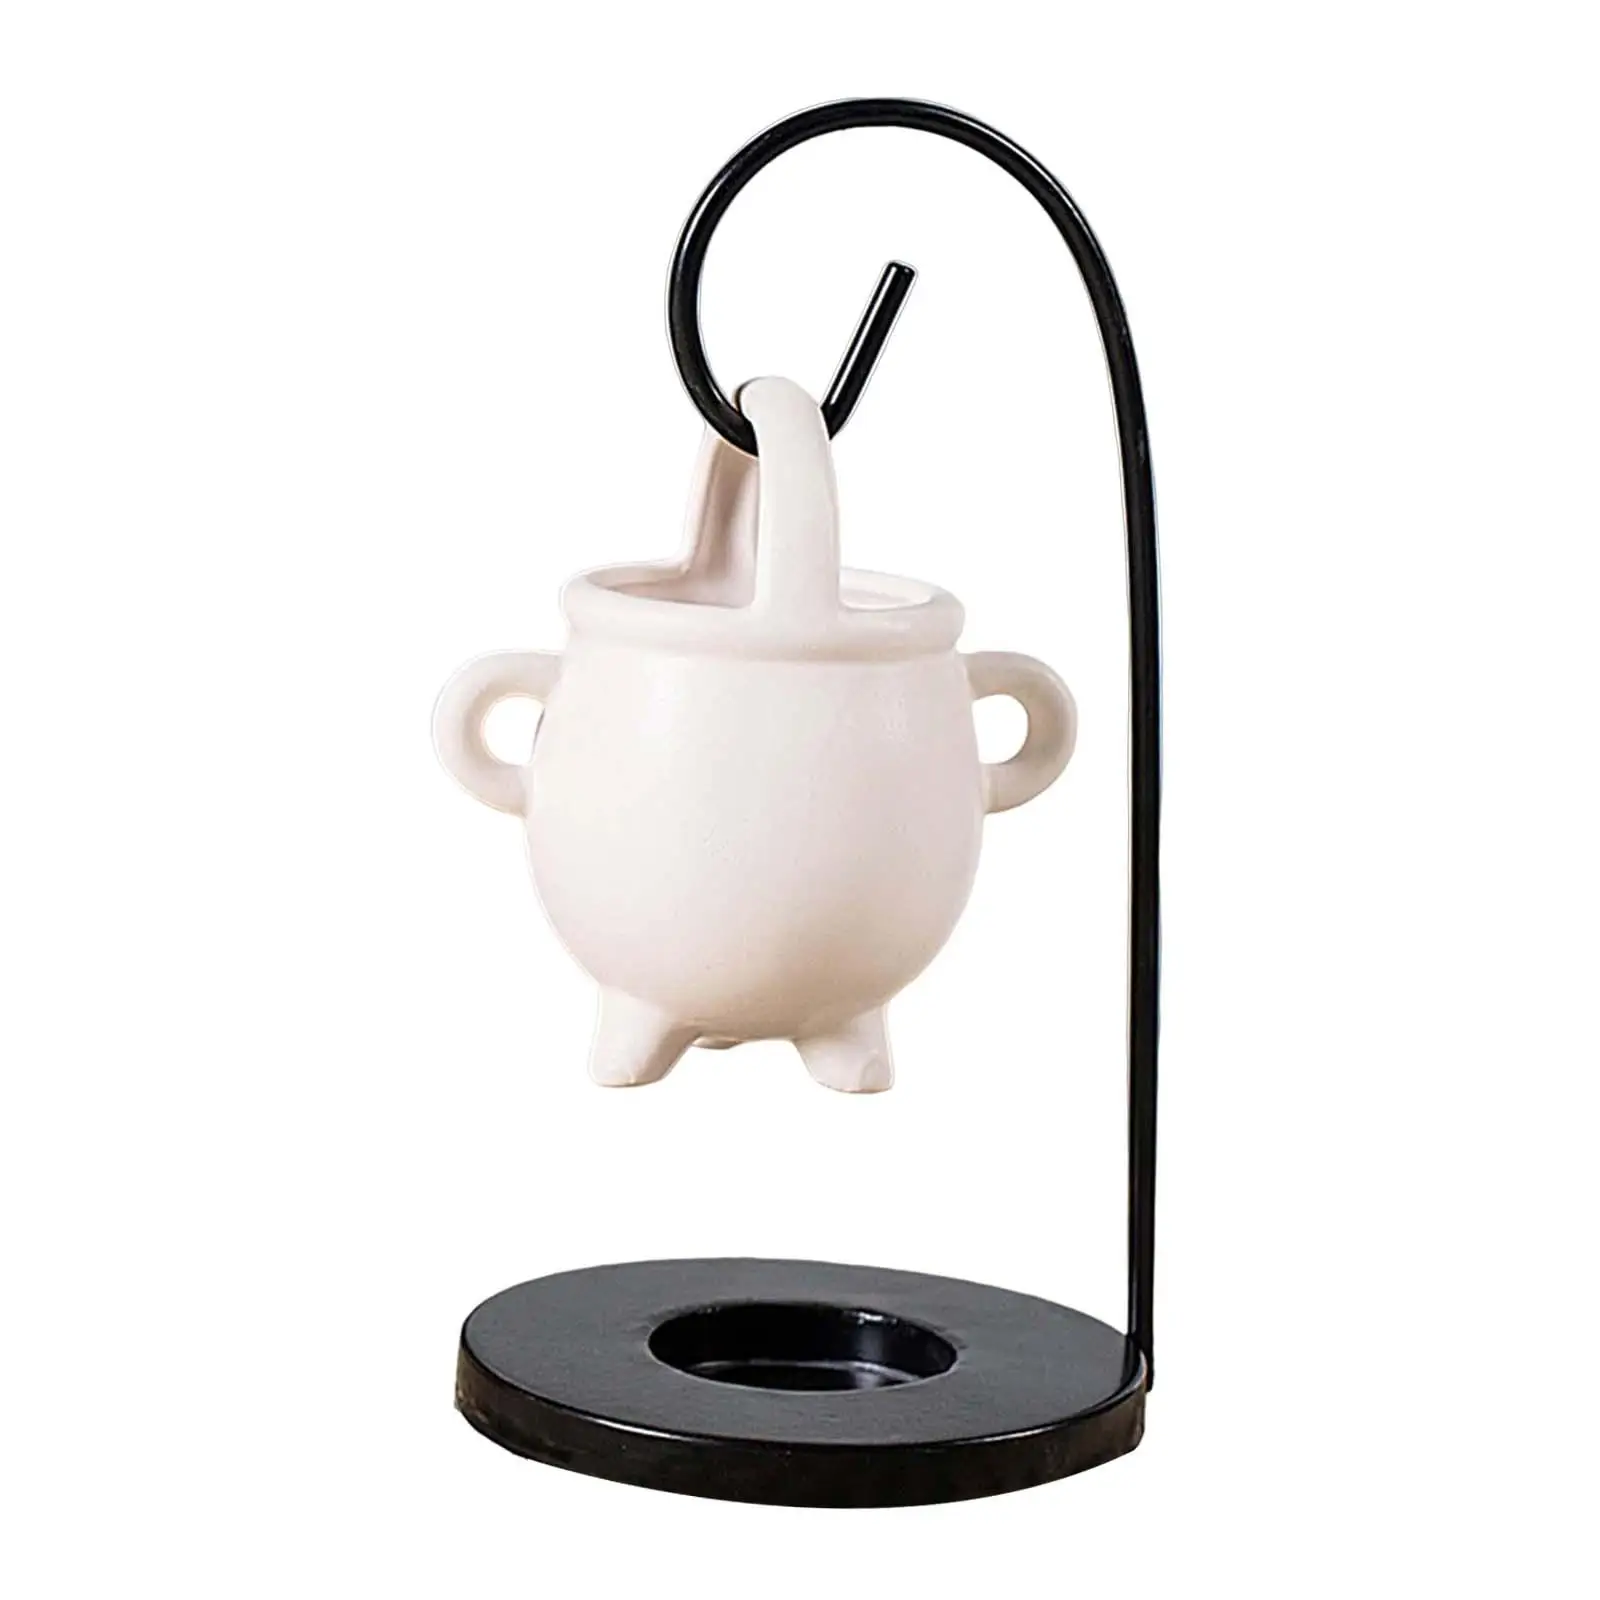 Essential Oil Burner Wax Melt Warmer Desk Diffuser Furnace Ceramic Tealight Candle Holder for Holiday Decoration Cabinet SPA